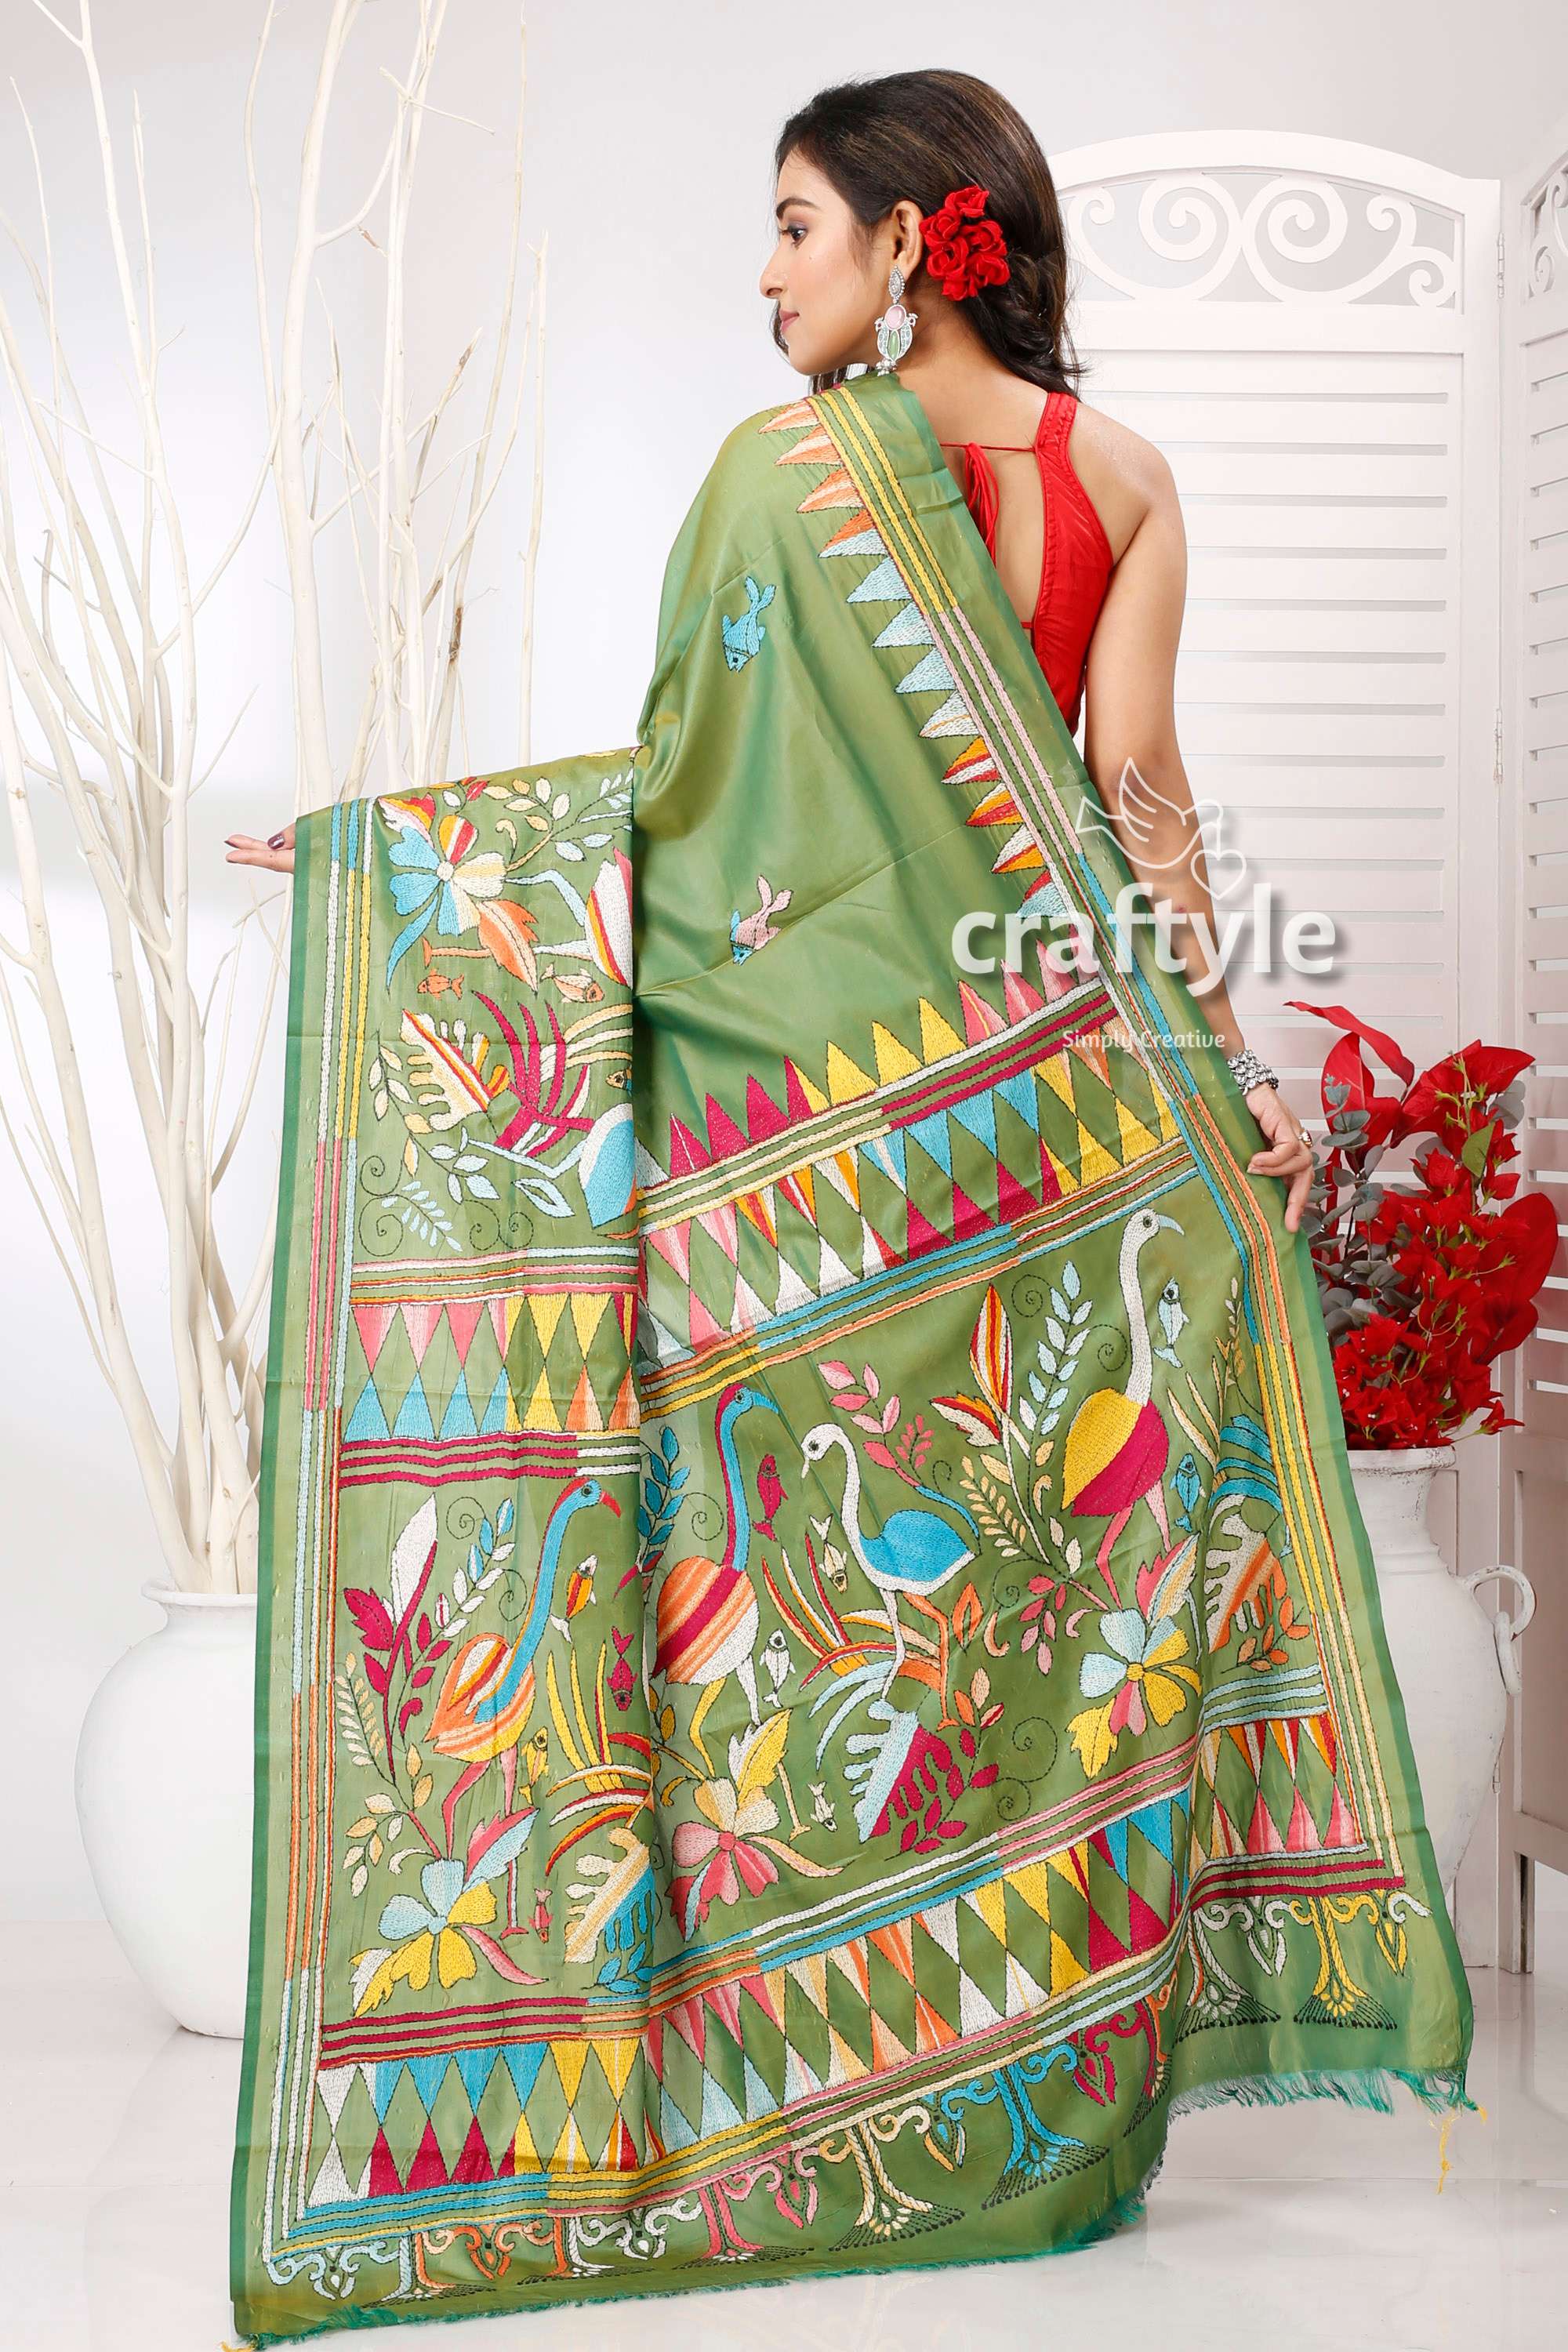 May Green Multithread Bird Motif Kantha Stitch Silk Sari - Craftyle